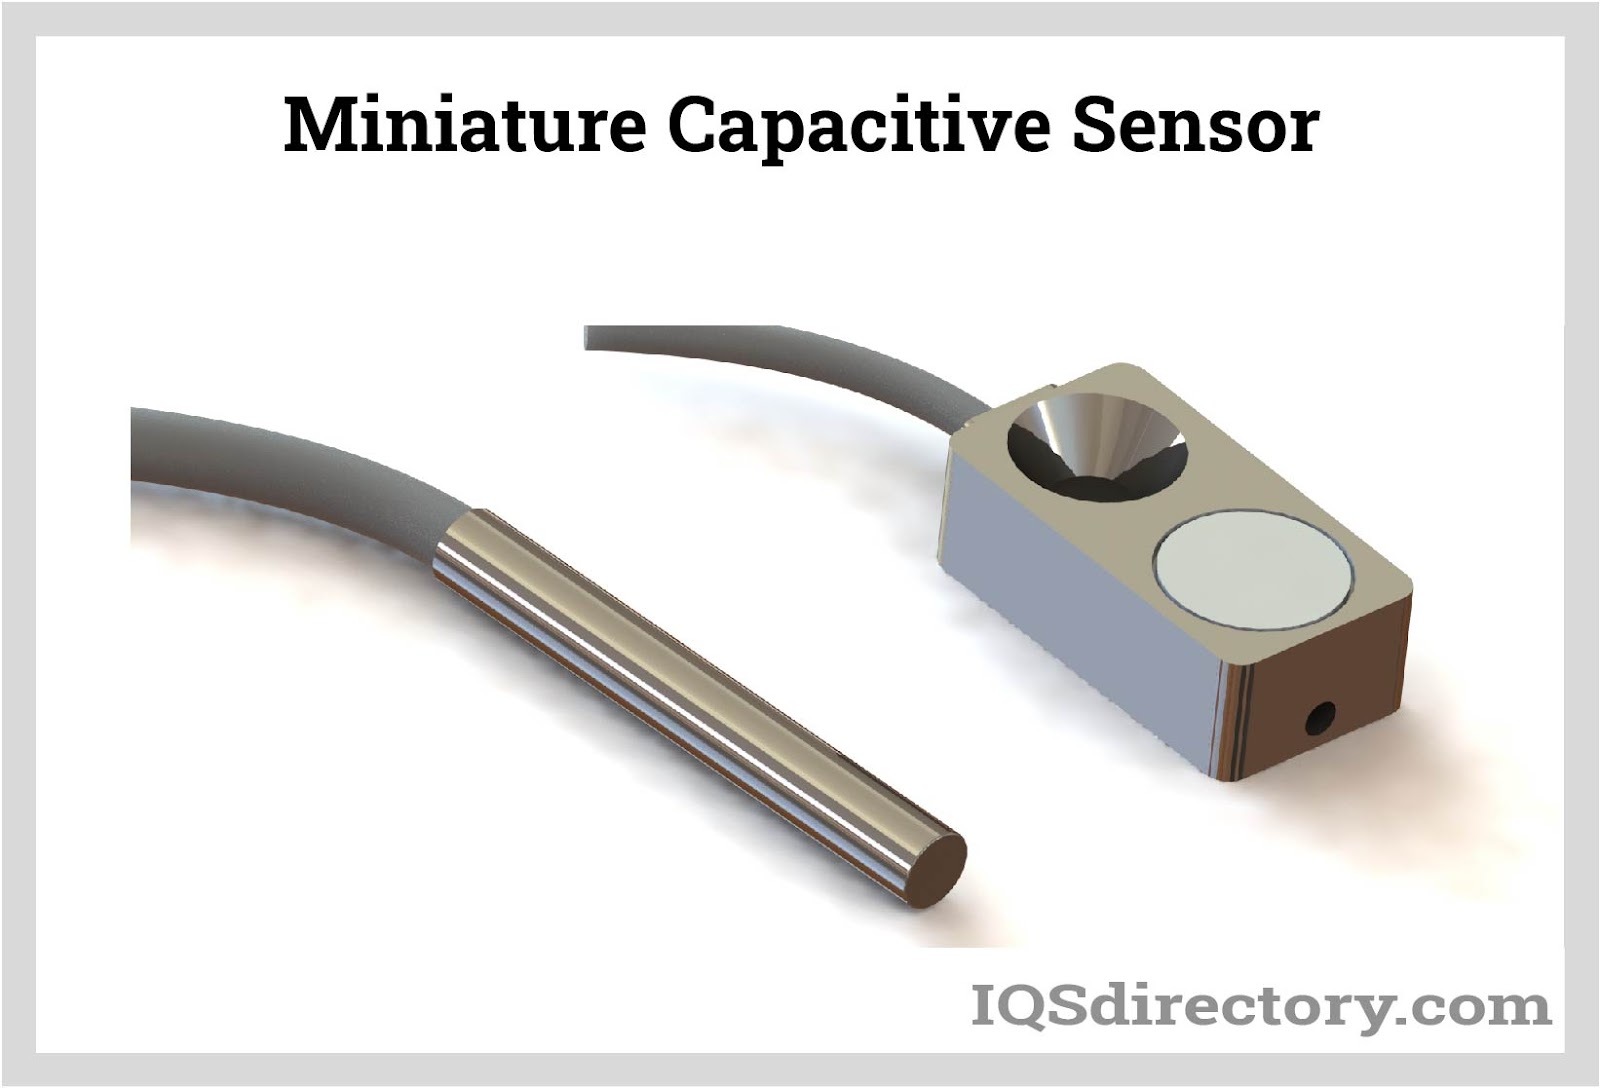 Miniature Capacitive Sensor